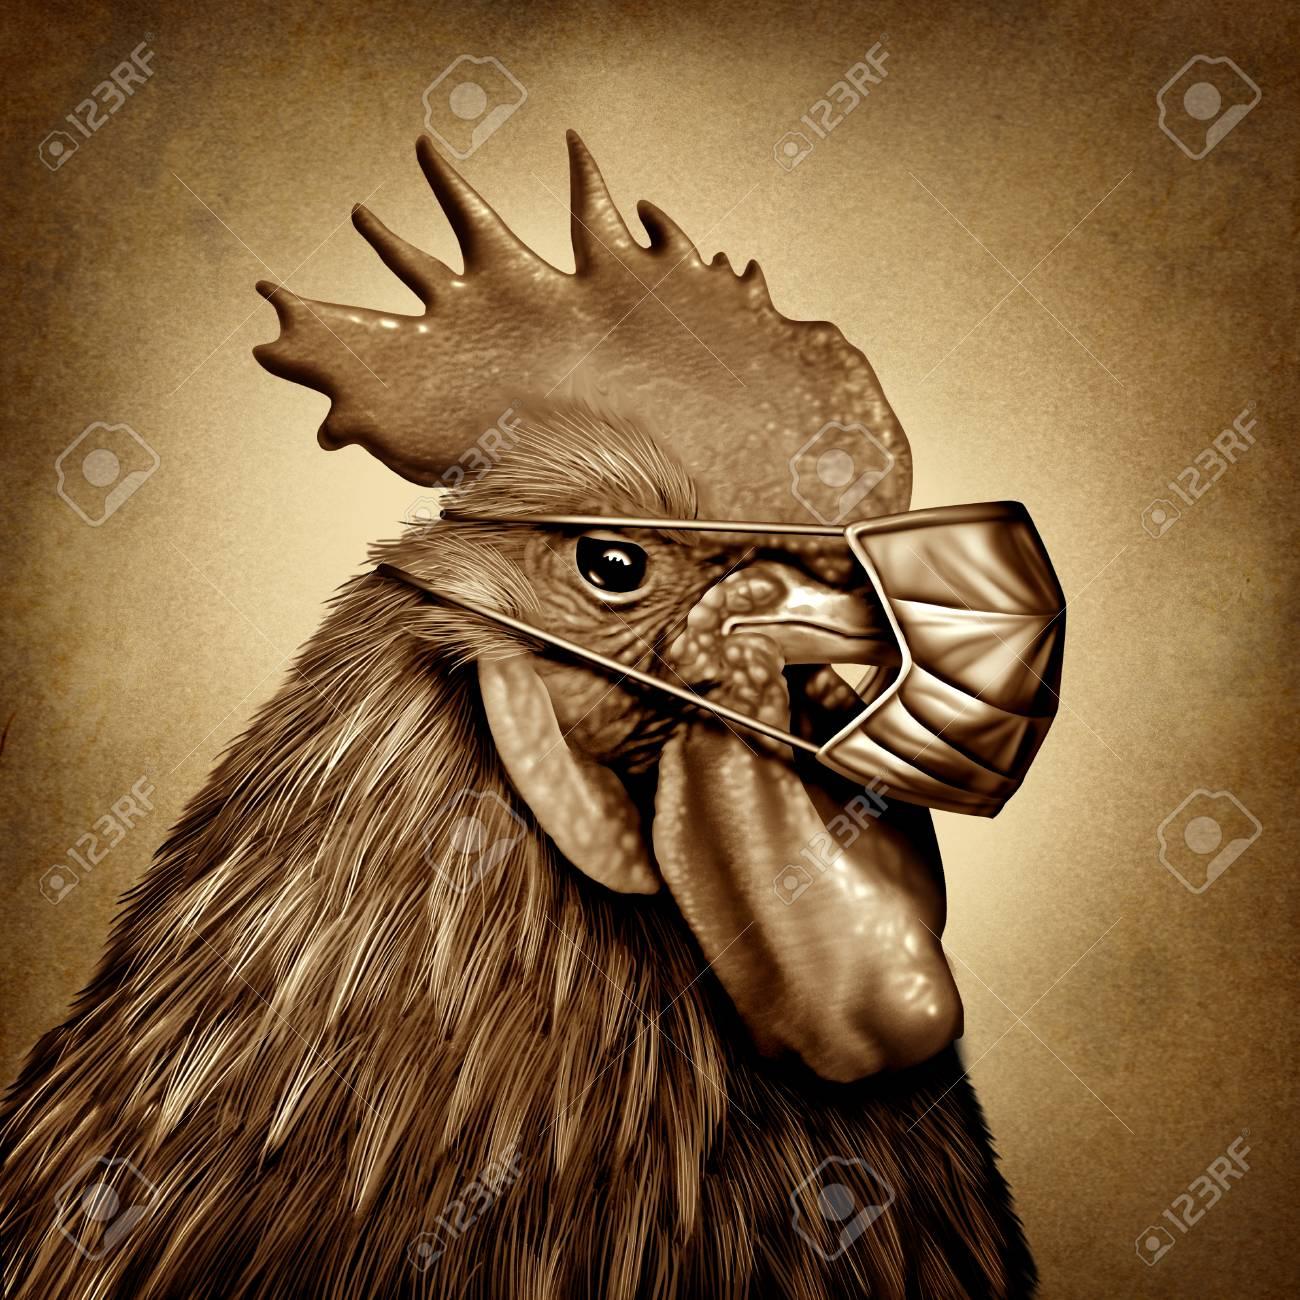 Poultry_Avian_Influenza